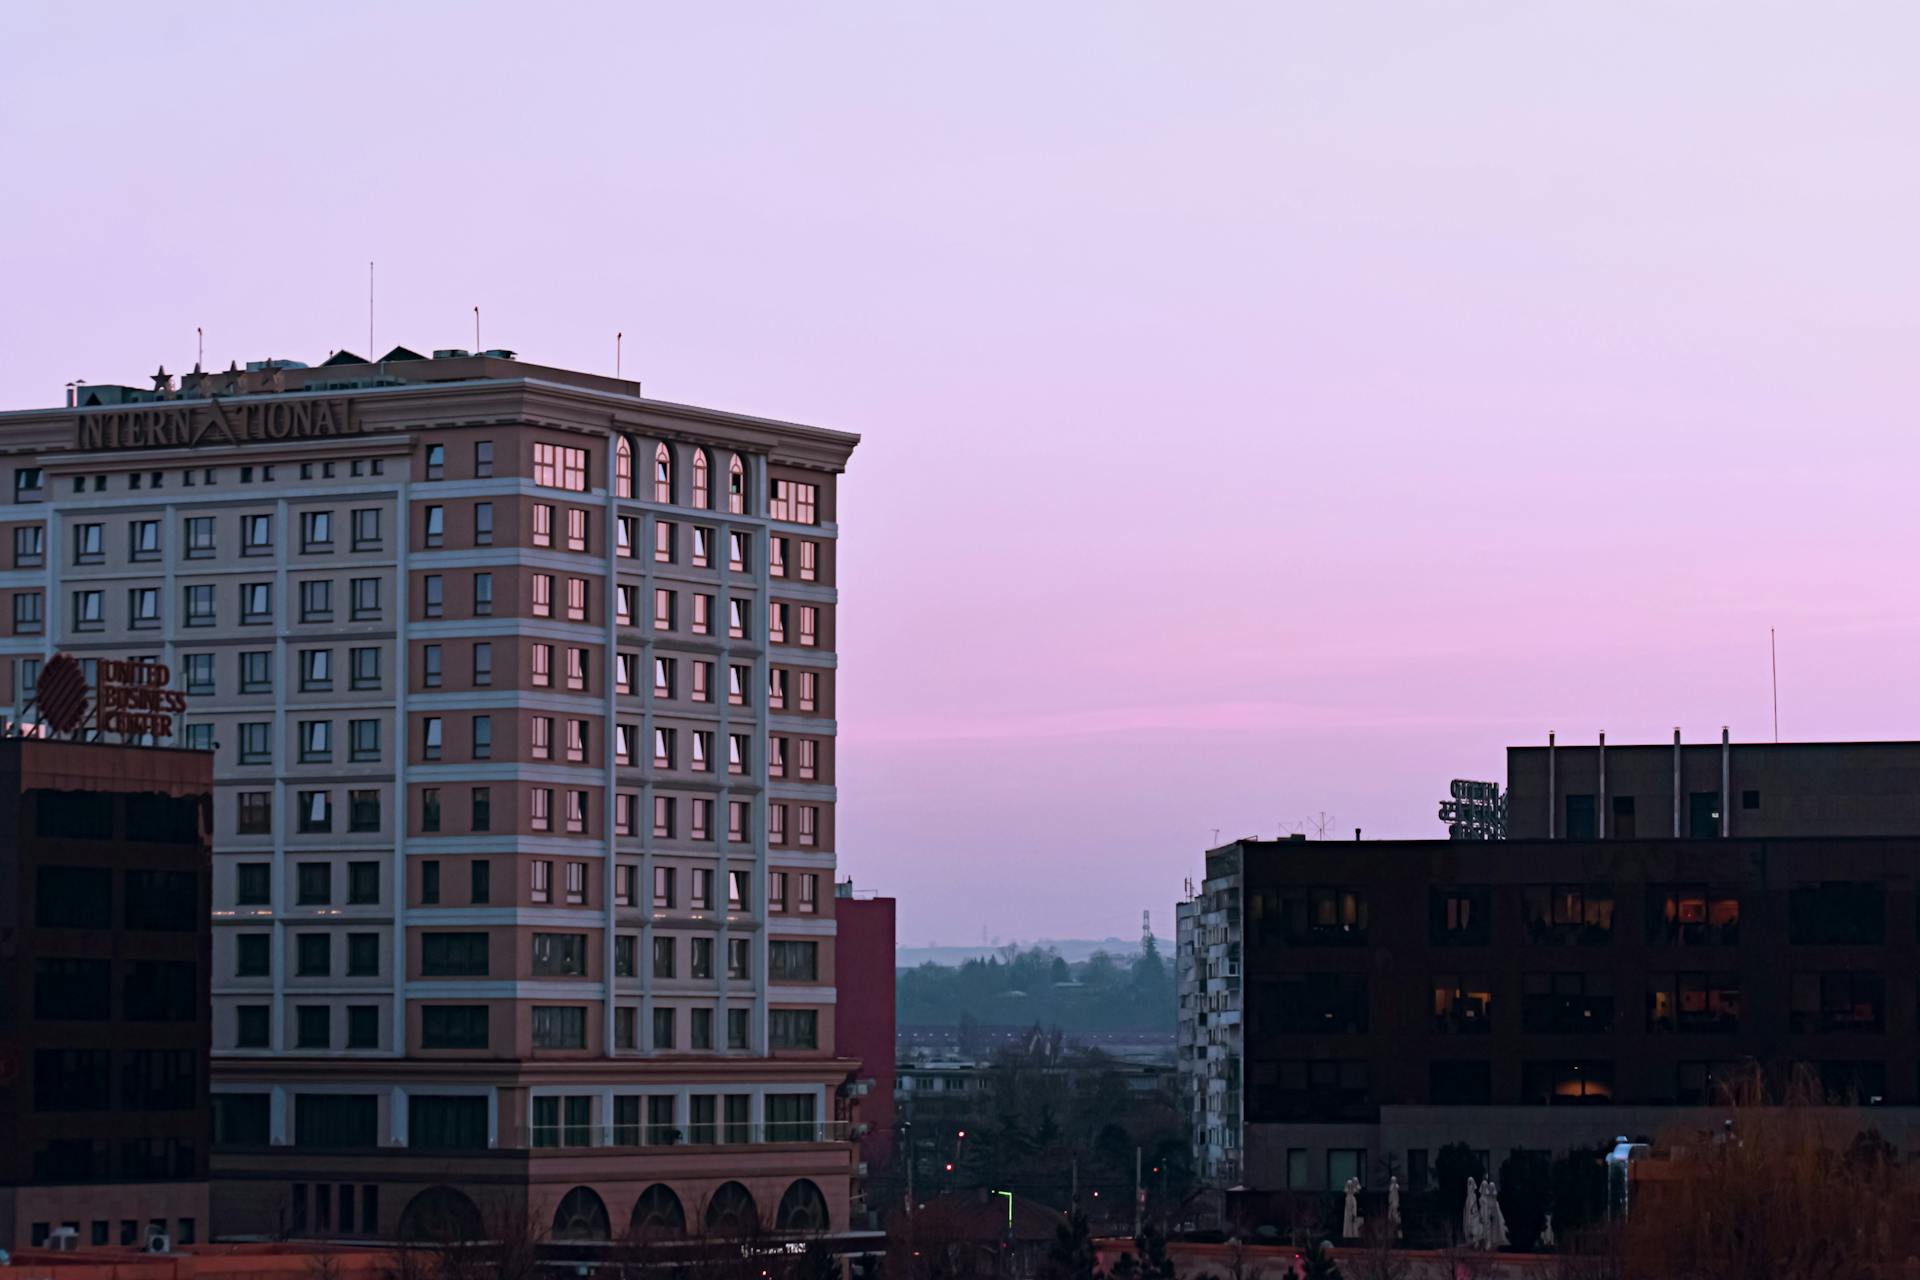 Cityscape with modern international hotel on sunset